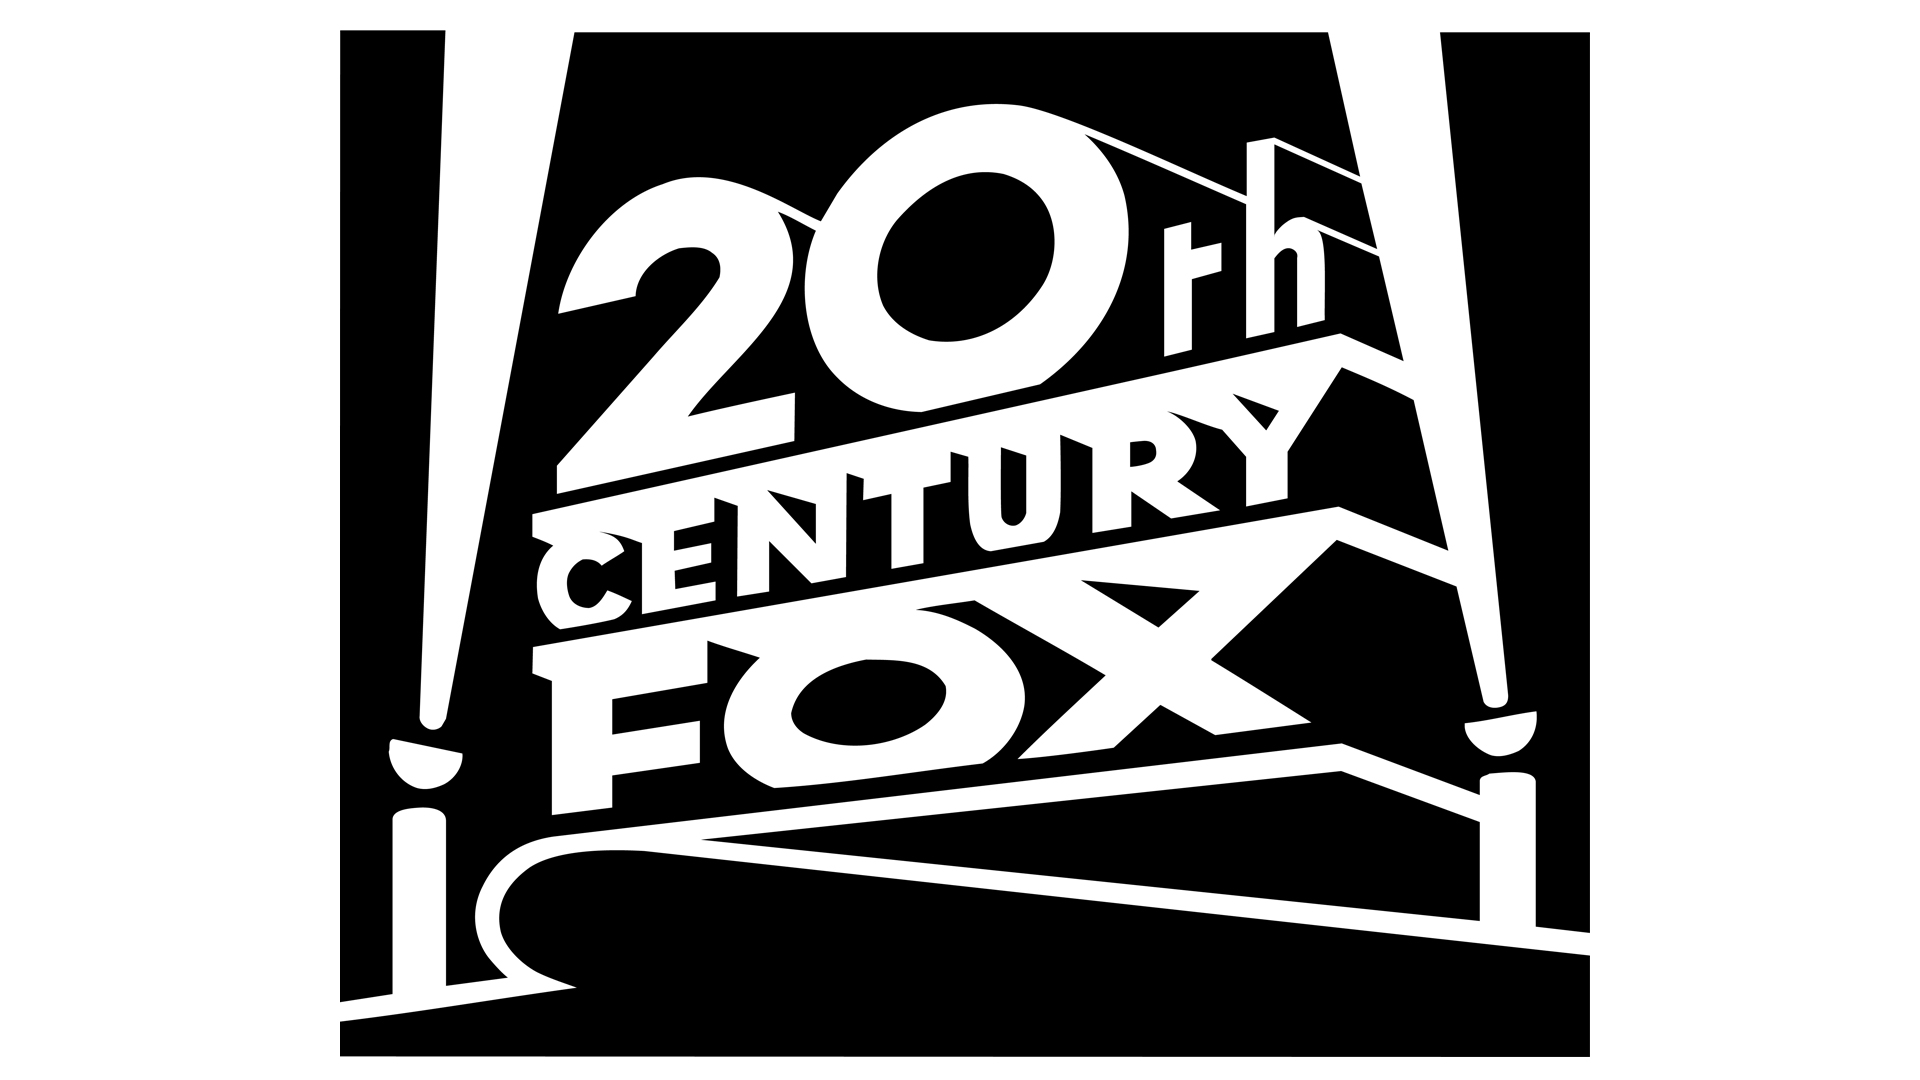 Fox entertainment. 20 Век Центури Фокс. 20 Центури Фокс Home Entertainment. 20 Век Фокс логотип. 20 Век Кинокомпания.